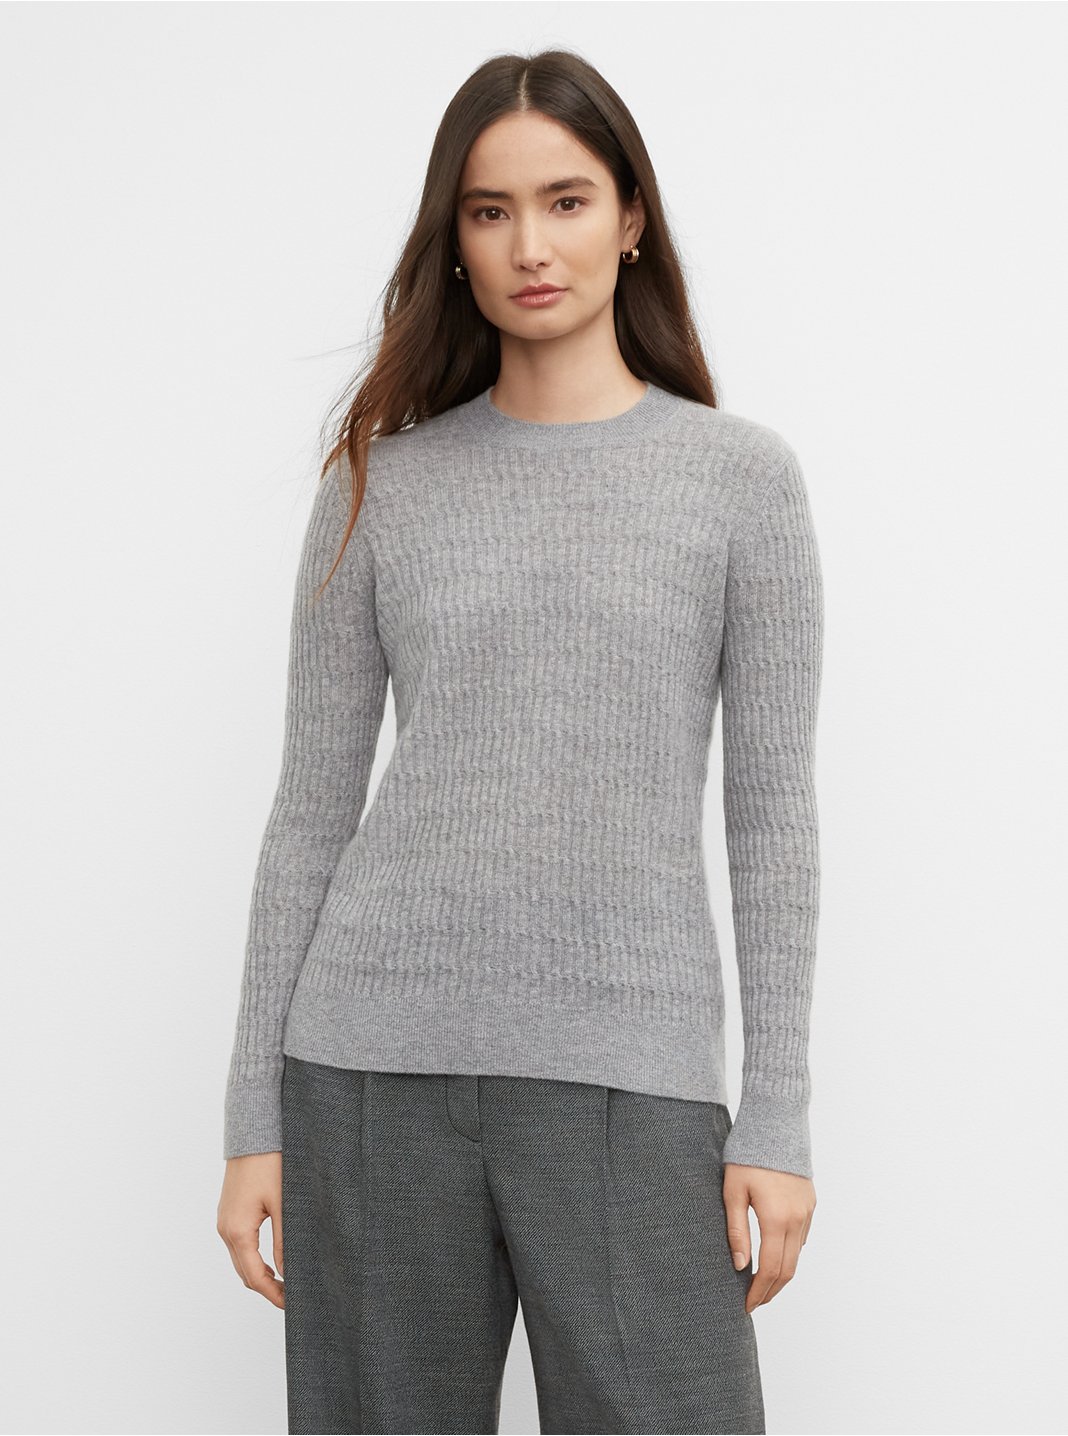 Clubmonaco Long Sleeve Stitch Cashmere Sweater